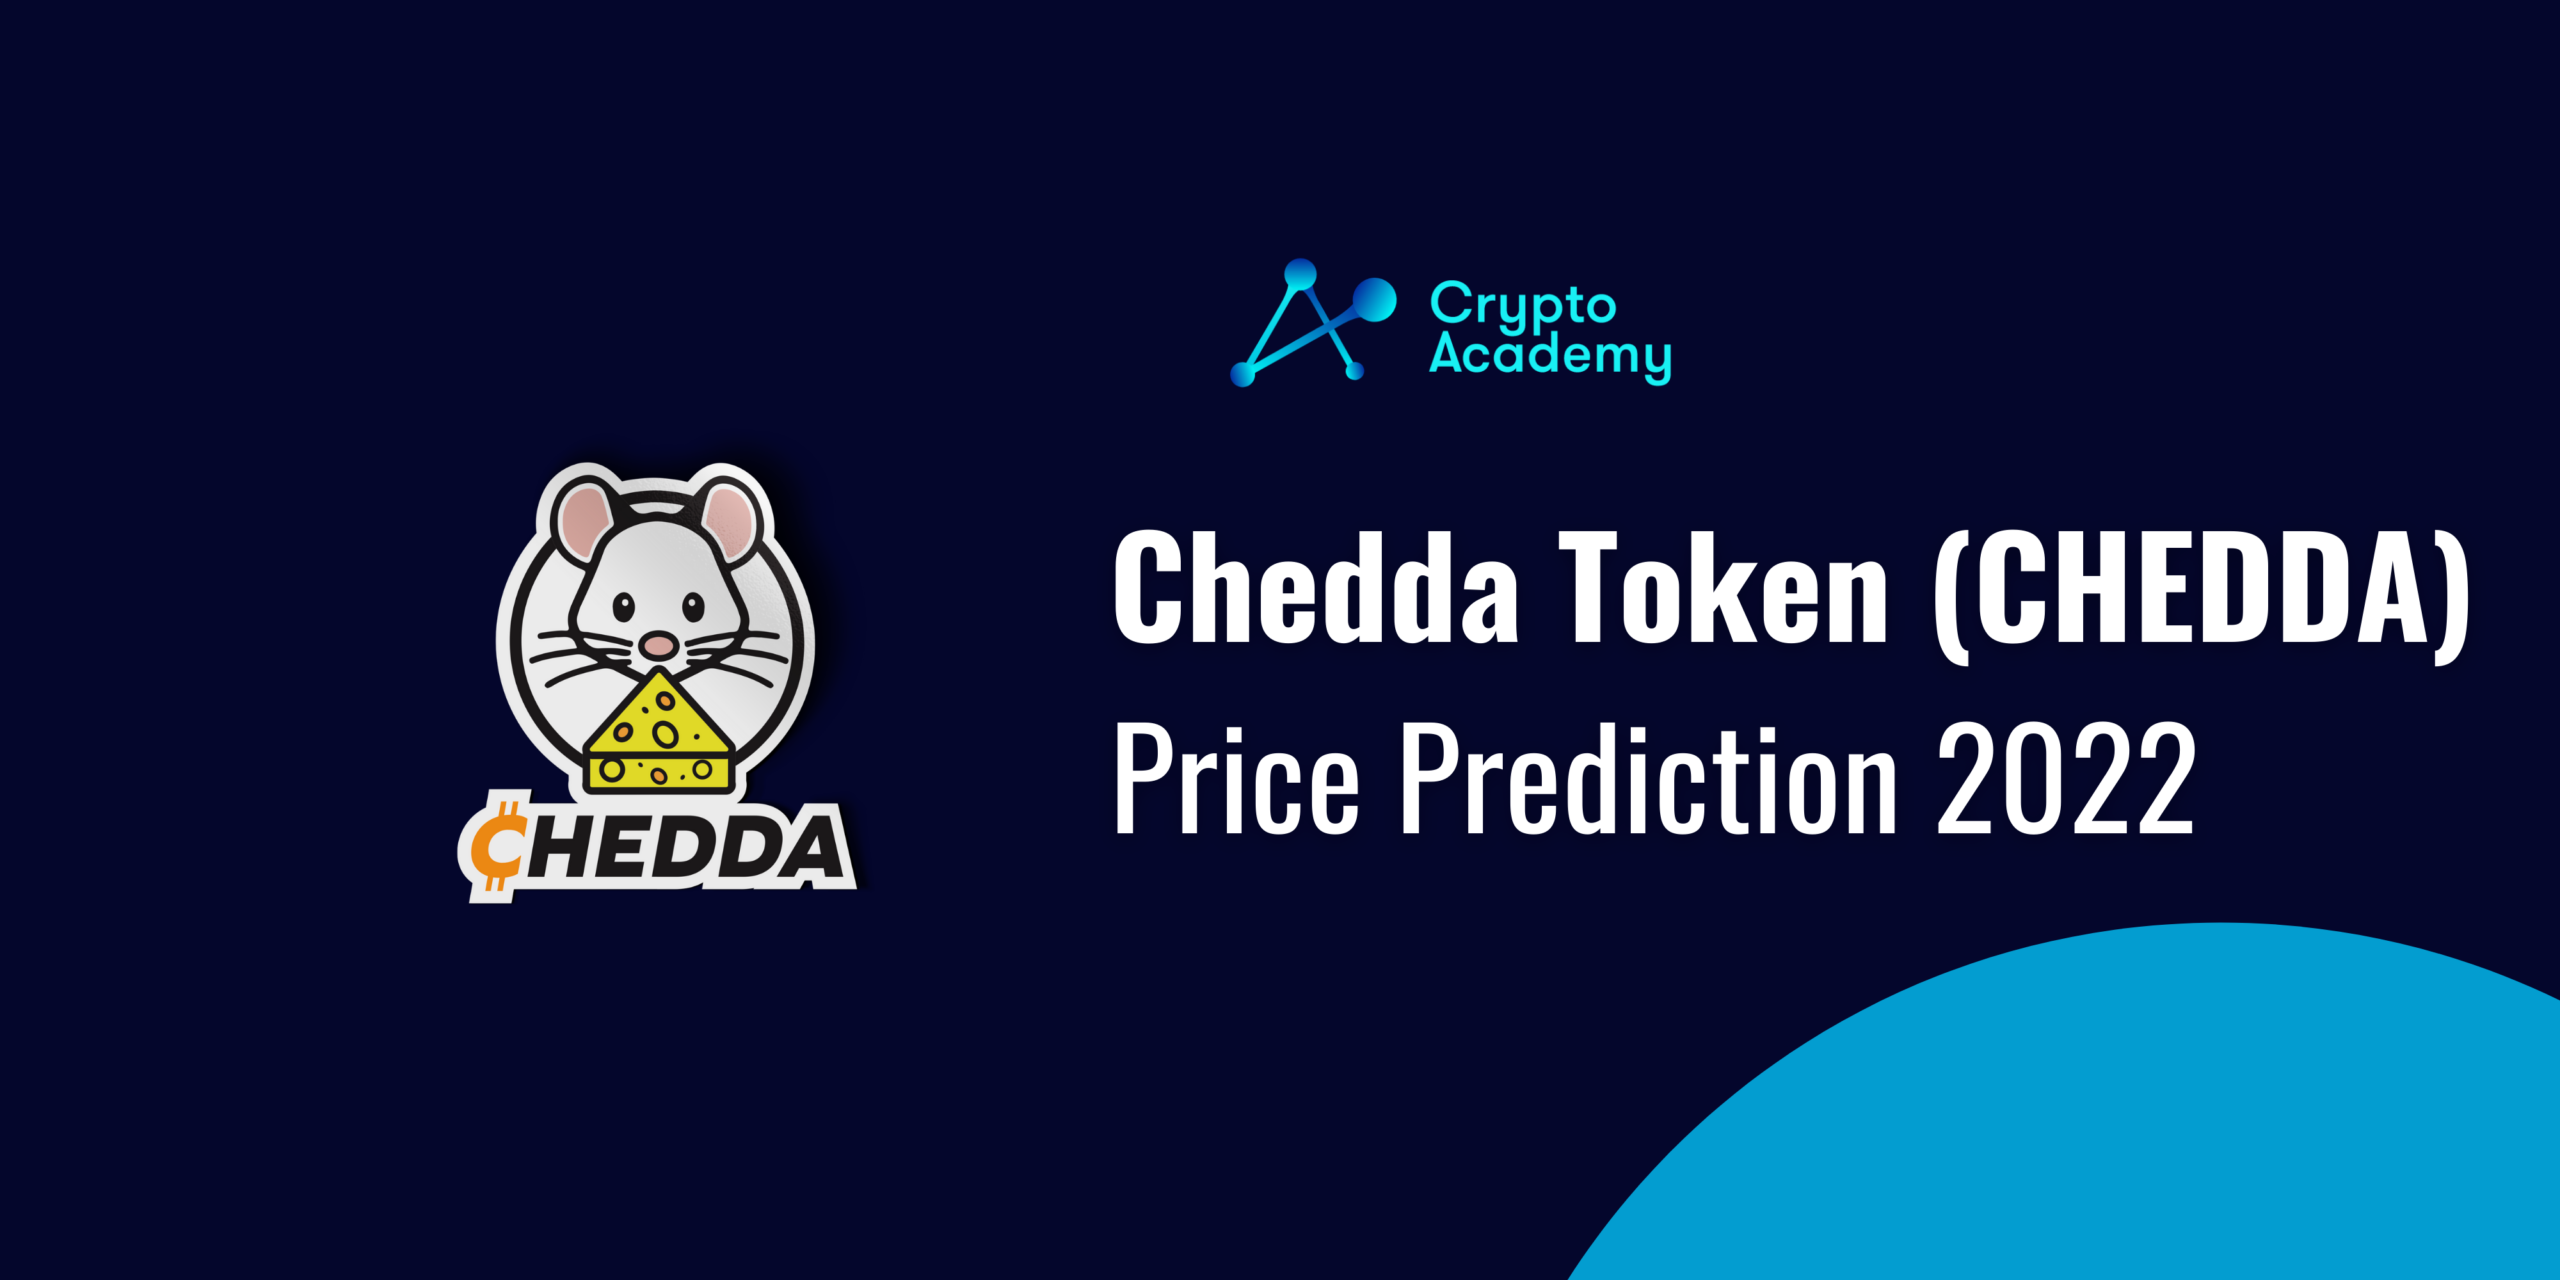 Chedda Token Price Prediction 2022 and Beyond - Can CHEDDA Reach $1?